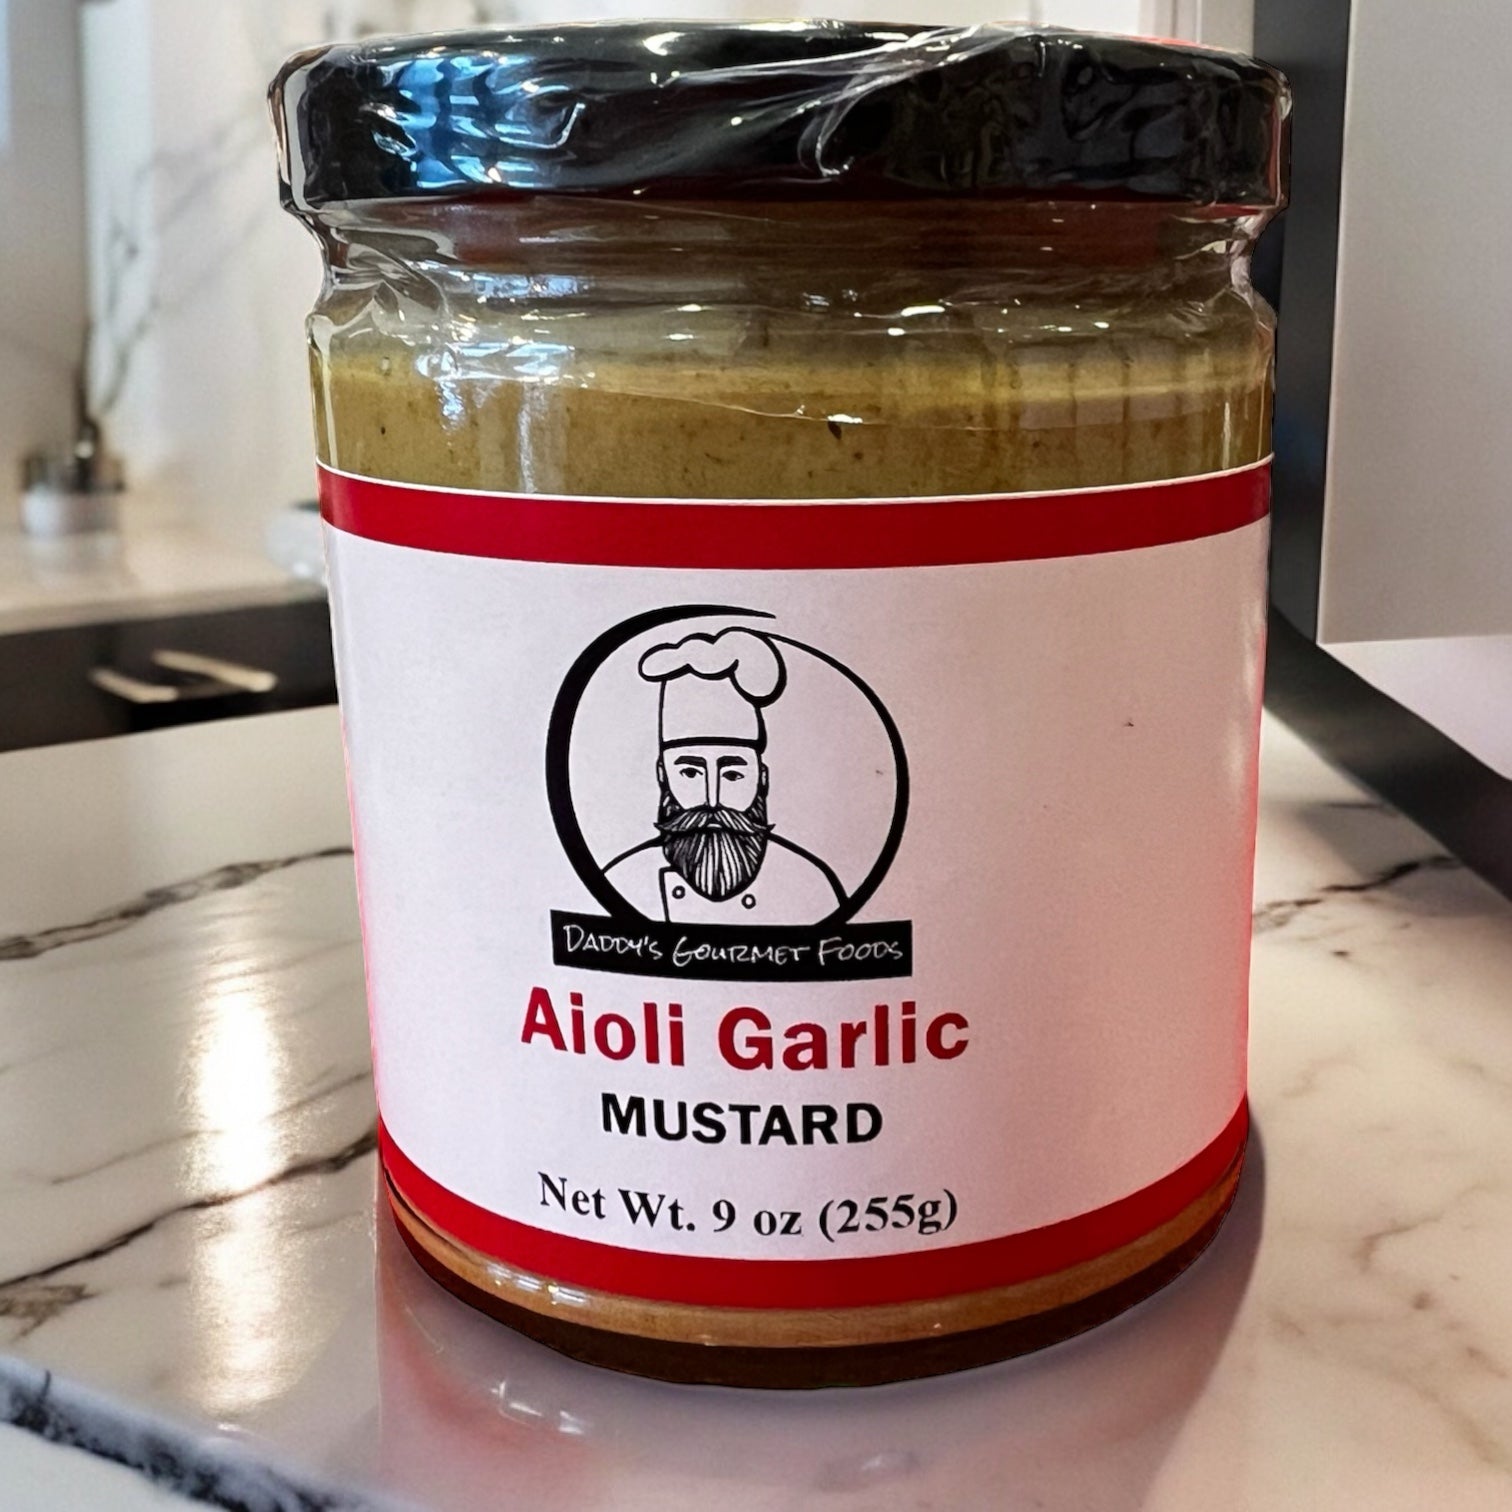 Aioli Garlic Mustard 9 oz (255g) Daddy's Gourmet Foods